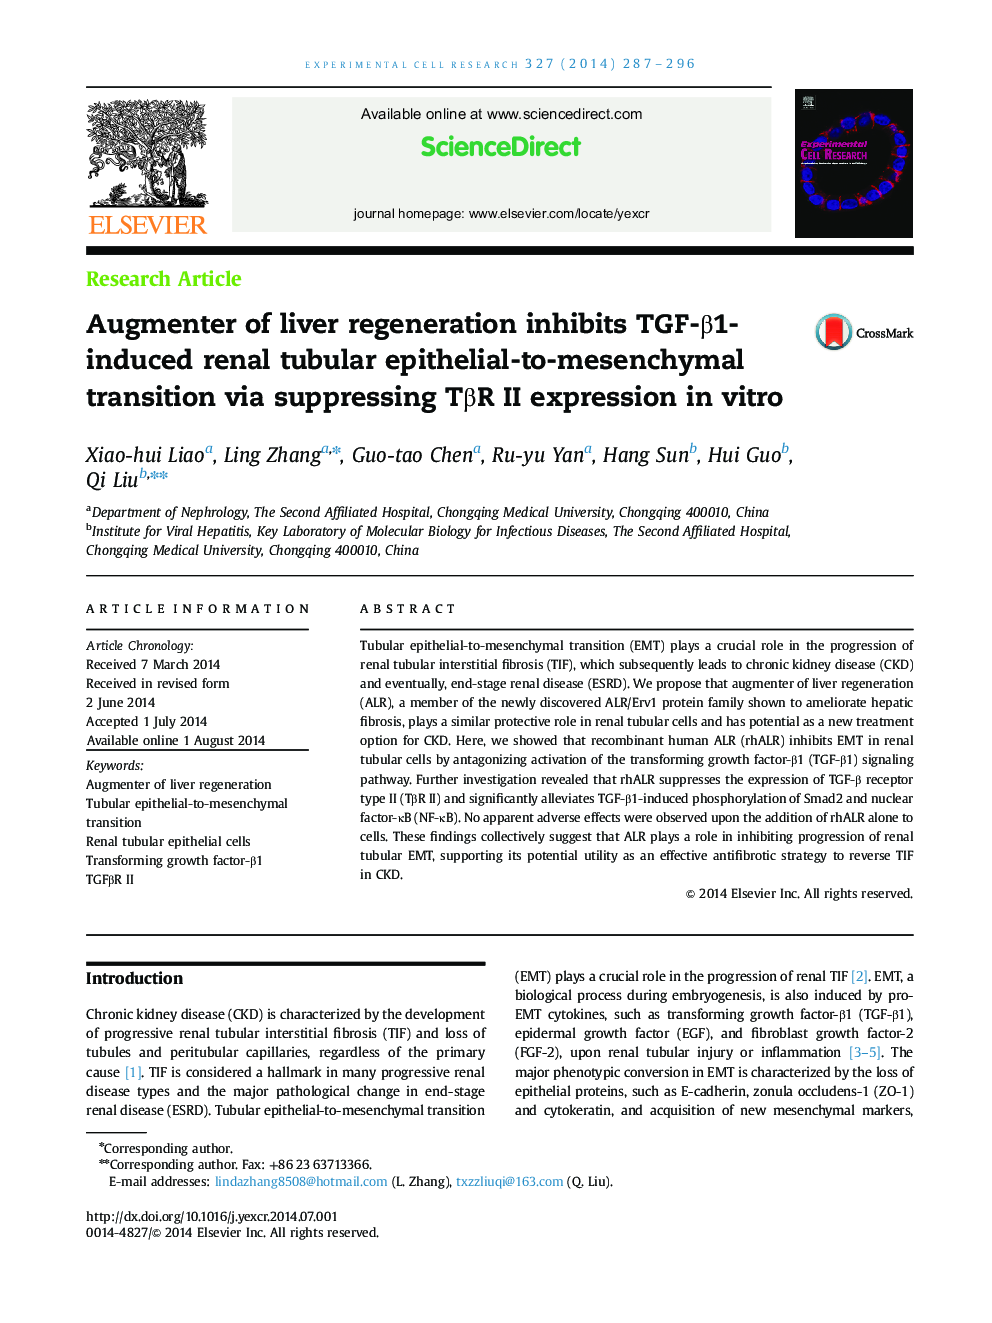 Augmenter of liver regeneration inhibits TGF-Î²1-induced renal tubular epithelial-to-mesenchymal transition via suppressing TÎ²R II expression in vitro